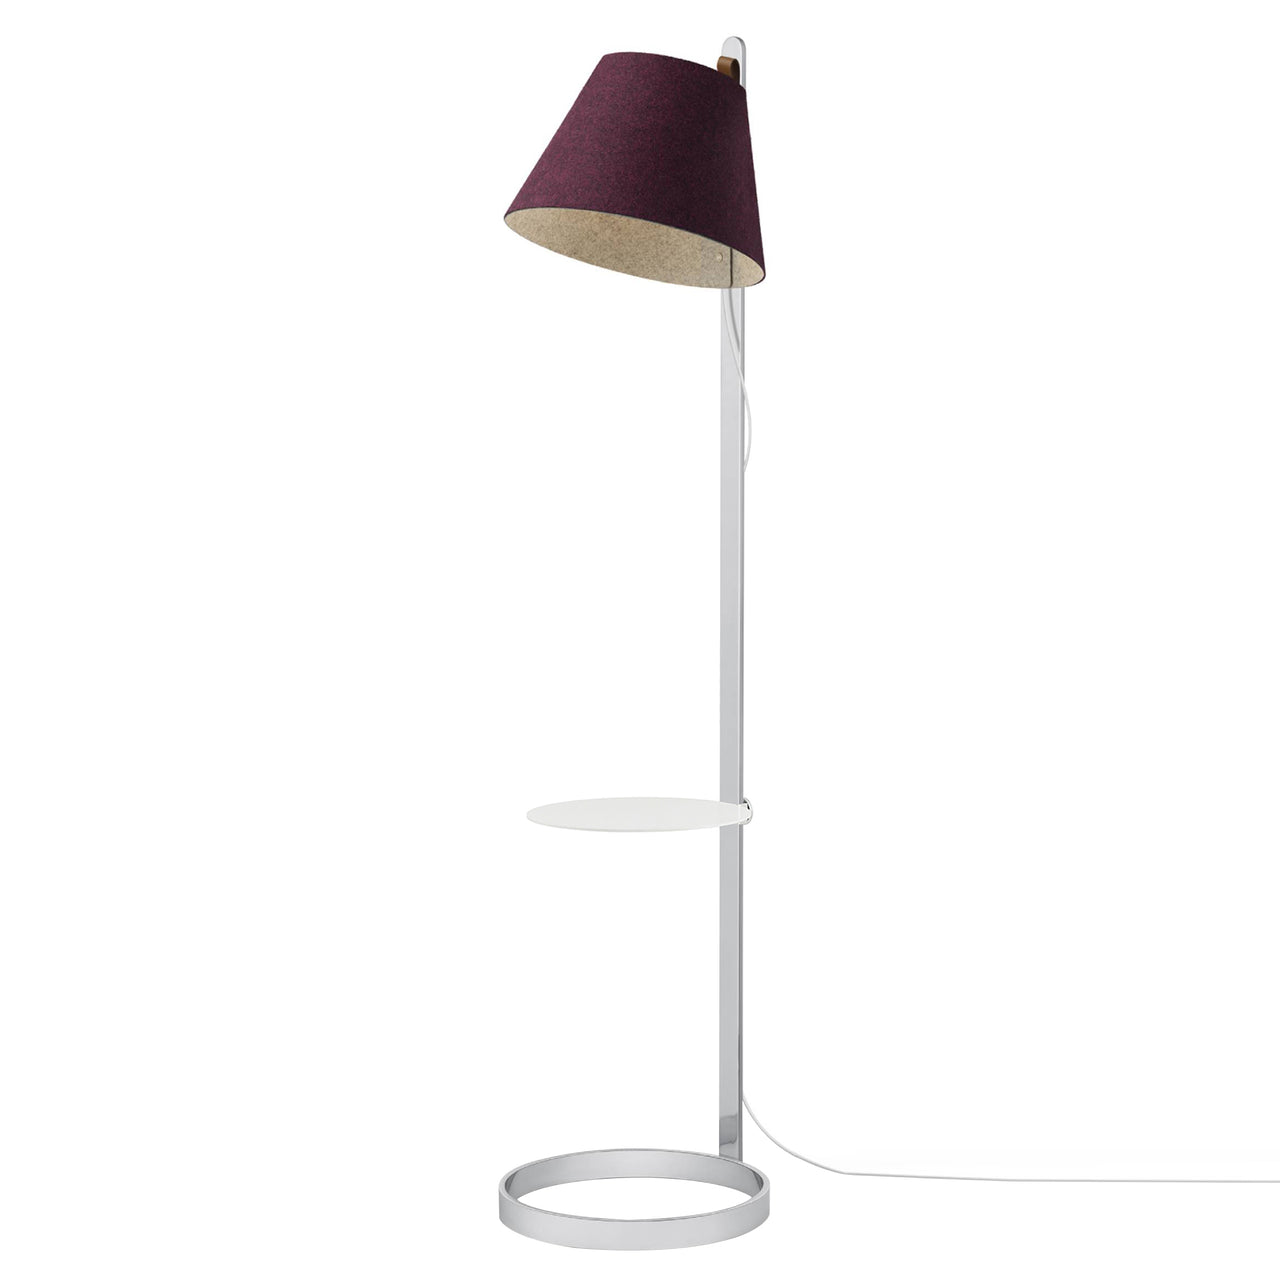 Lana Magnetic Floor Lamp: Plum + Chrome